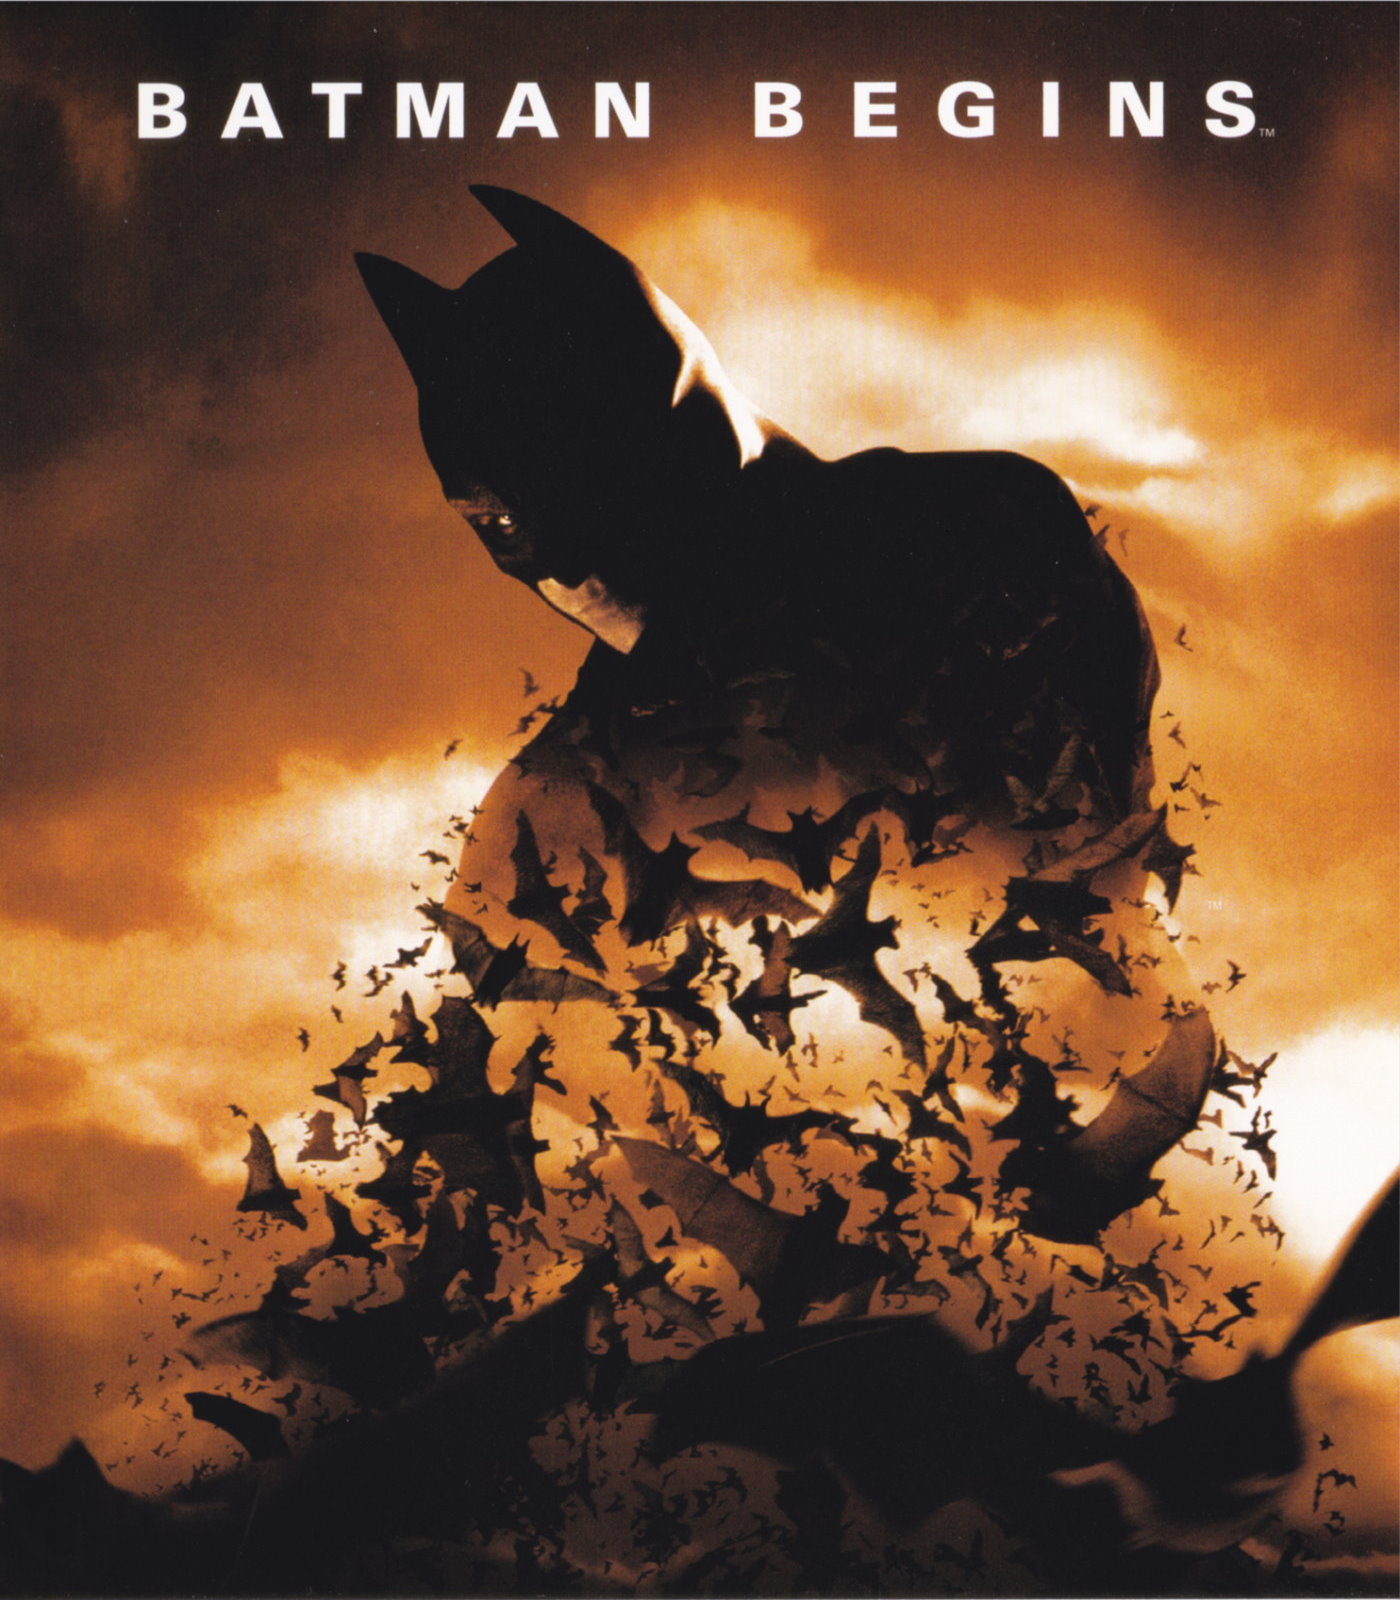 Cover - Batman Begins.jpg